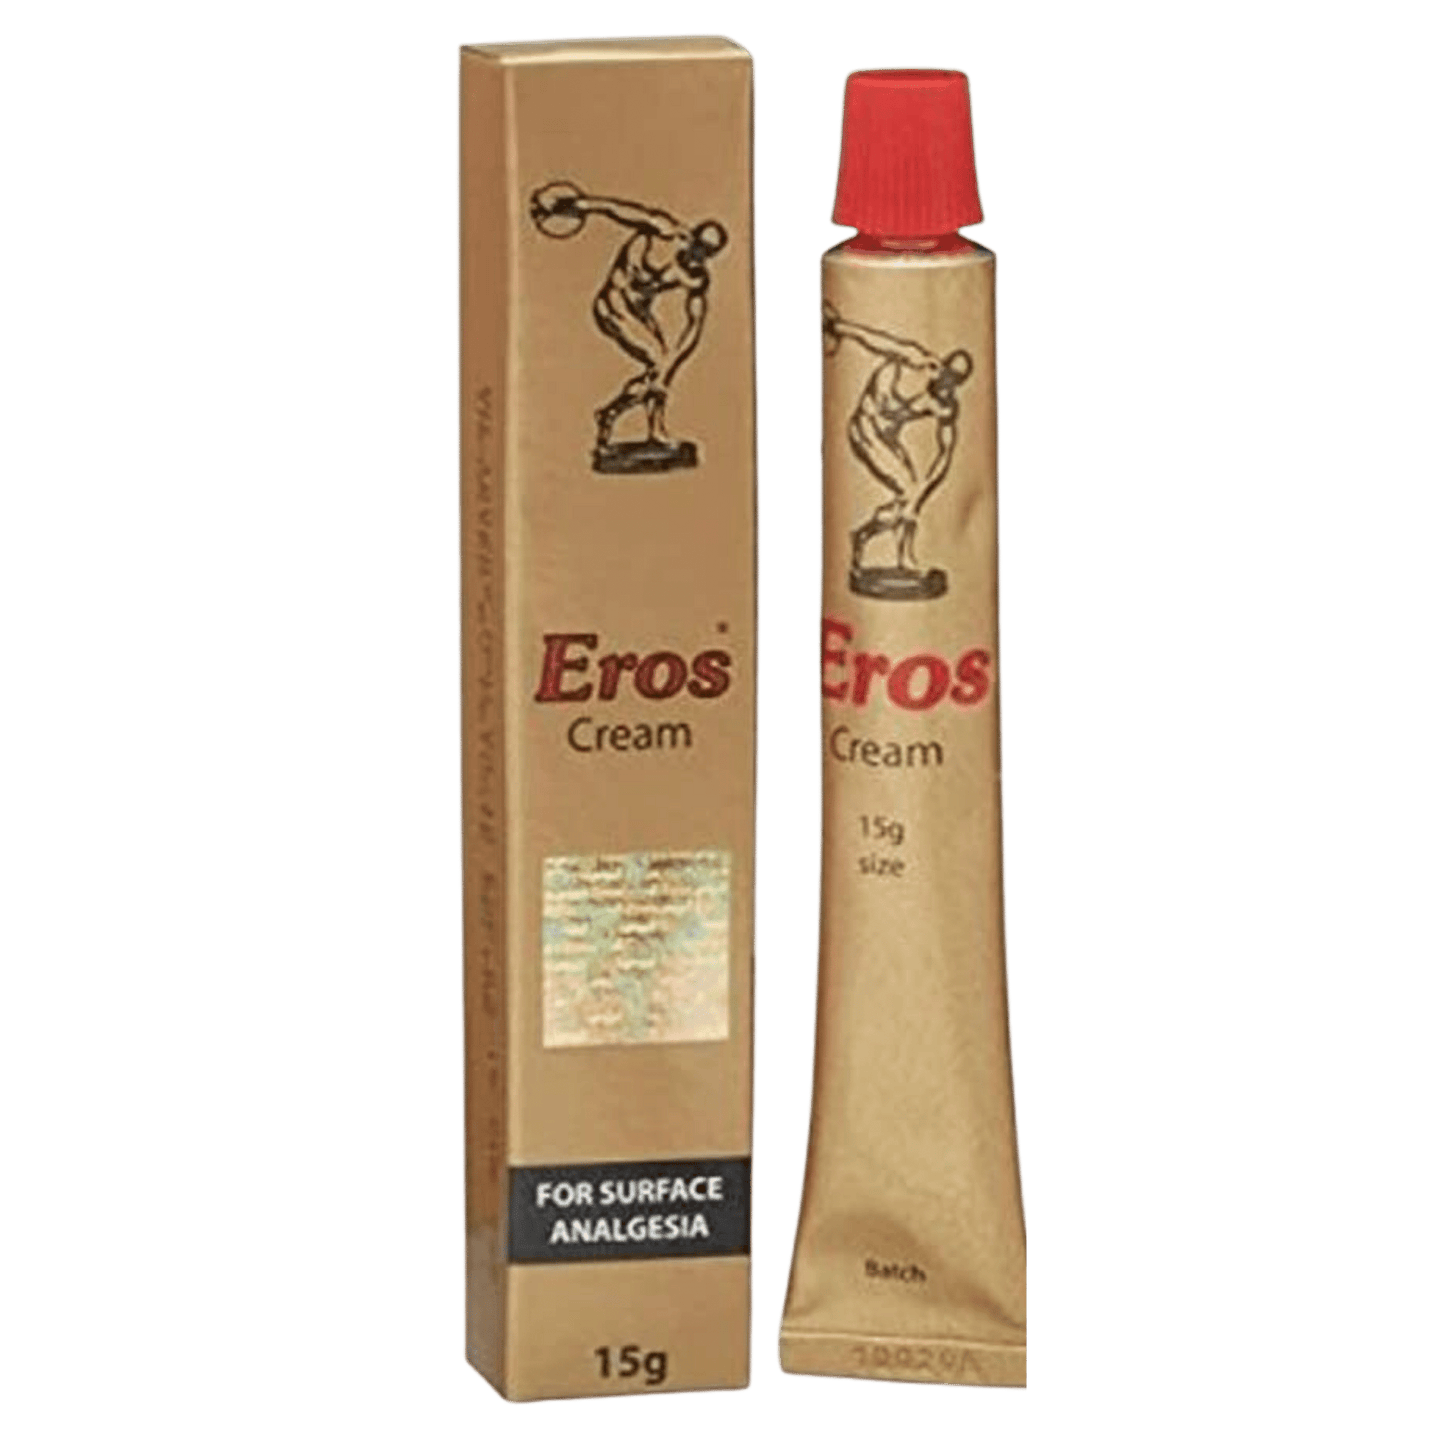 Eros Cream Lidocaine 15g - Reduces Male over sensitivity